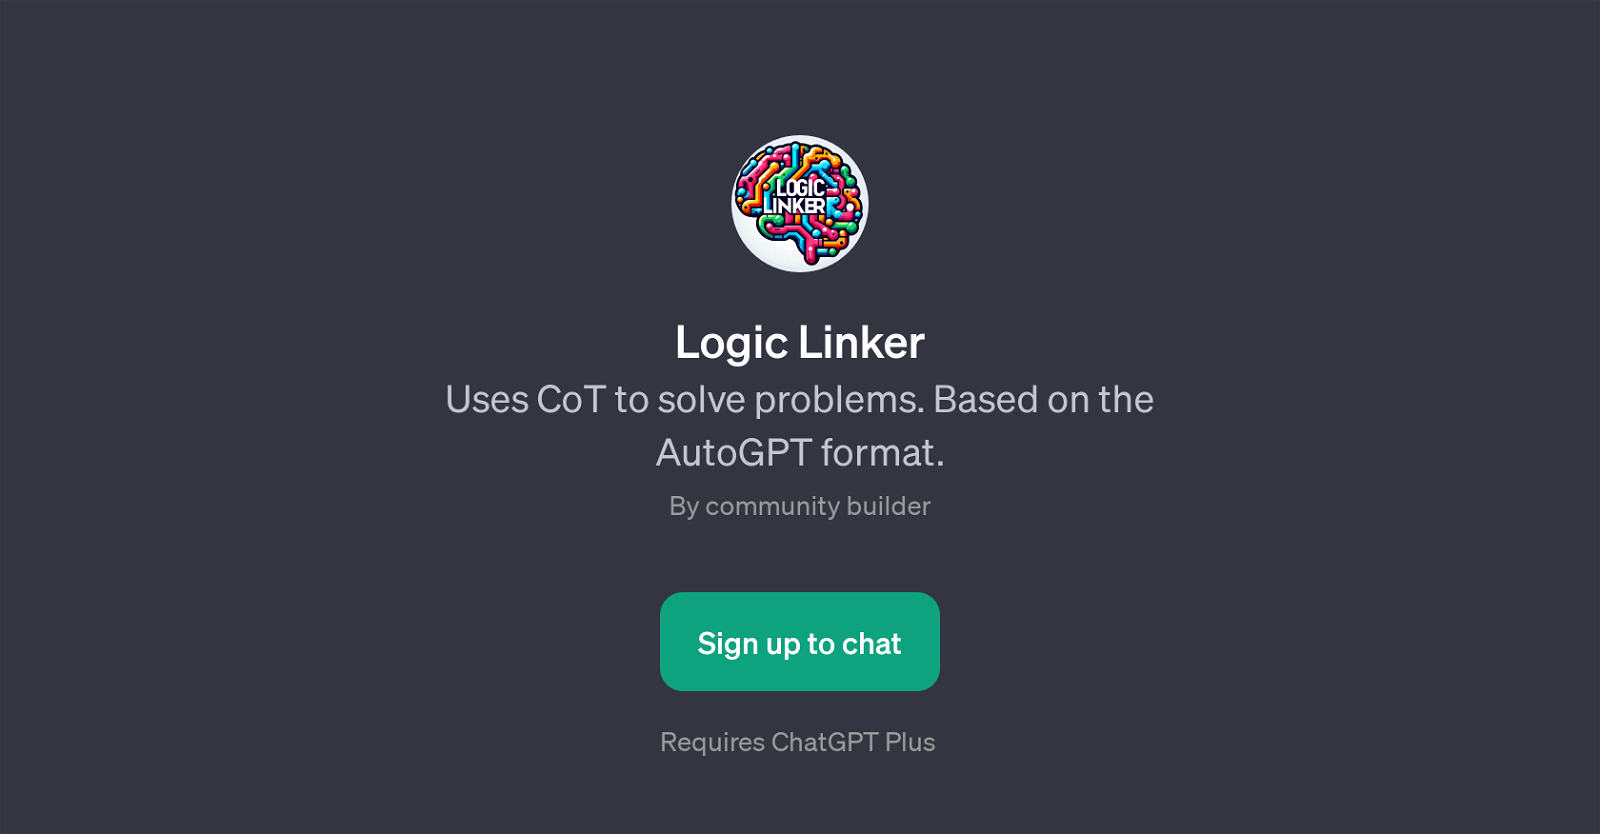 Logic Linker website